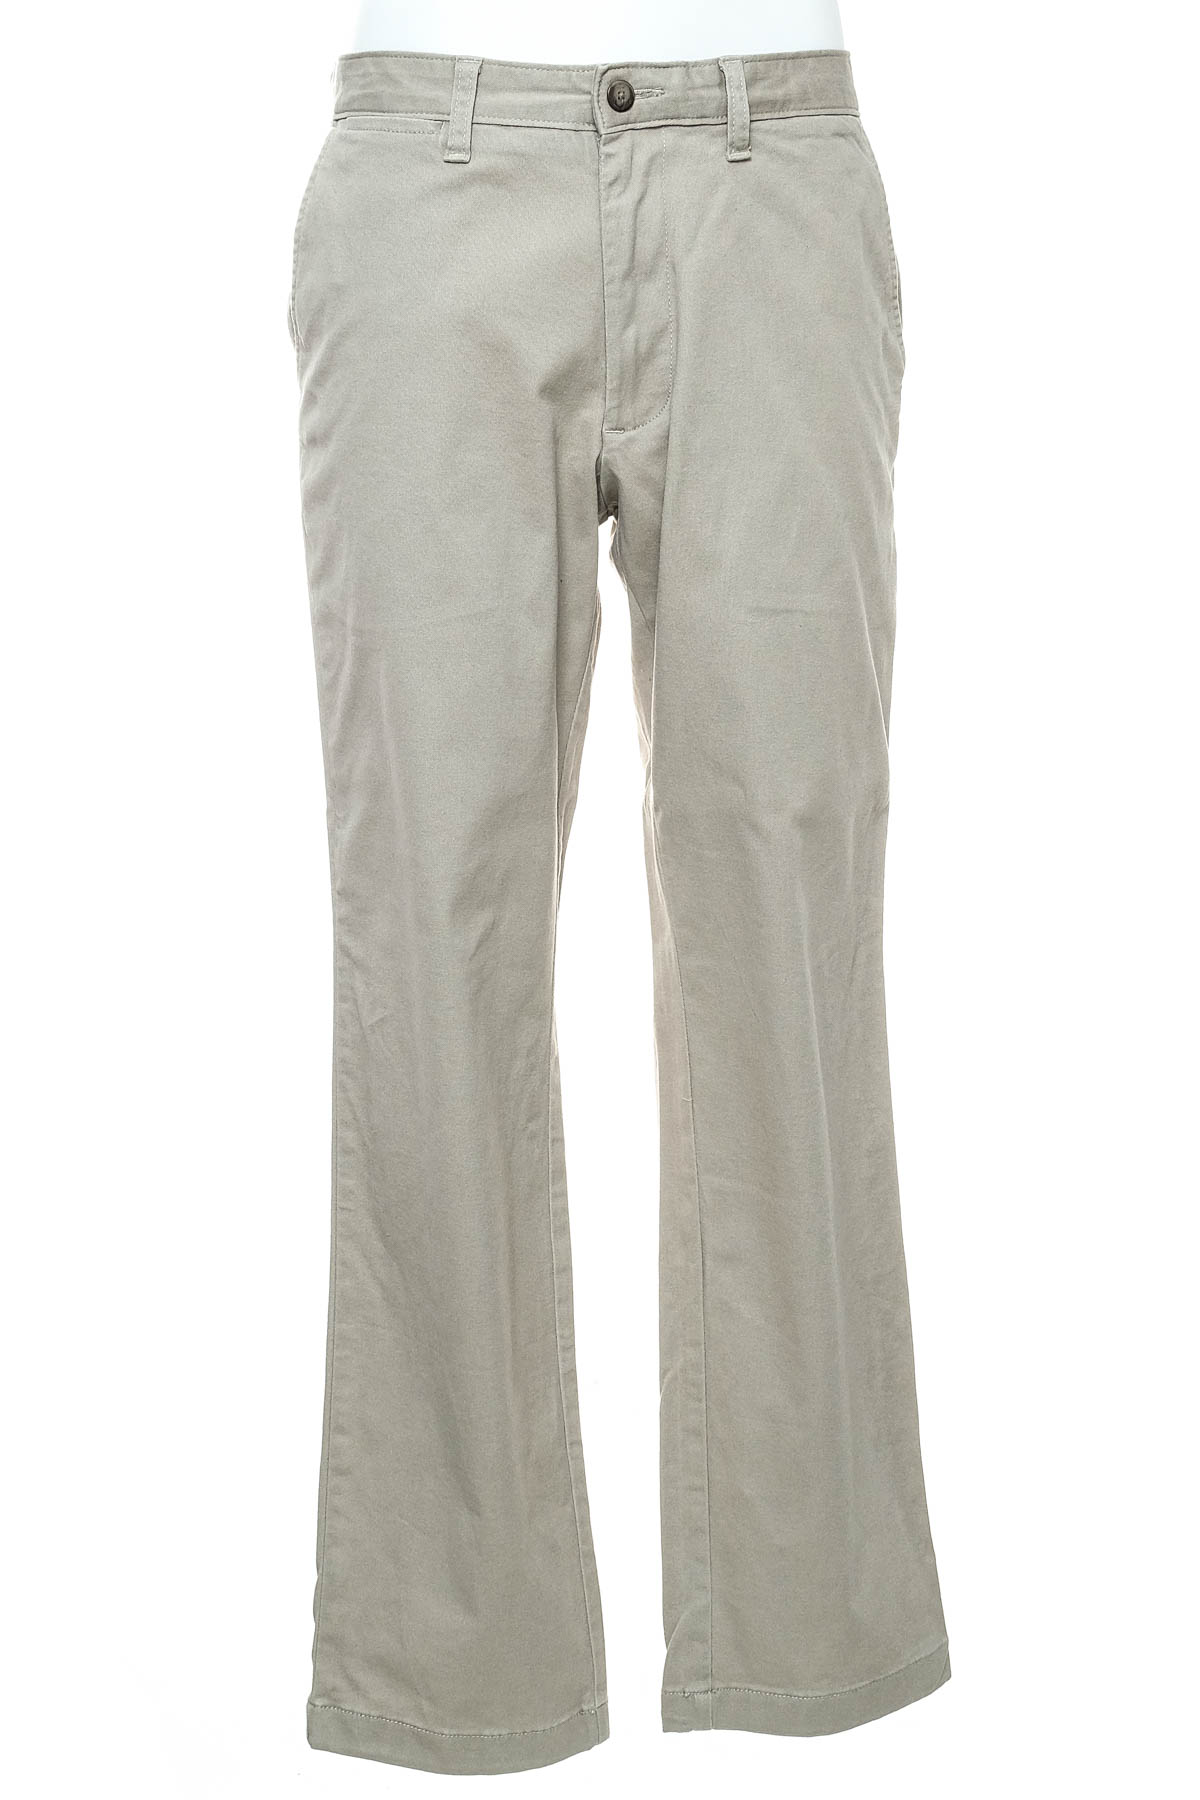 Men's trousers - Nautica - 0